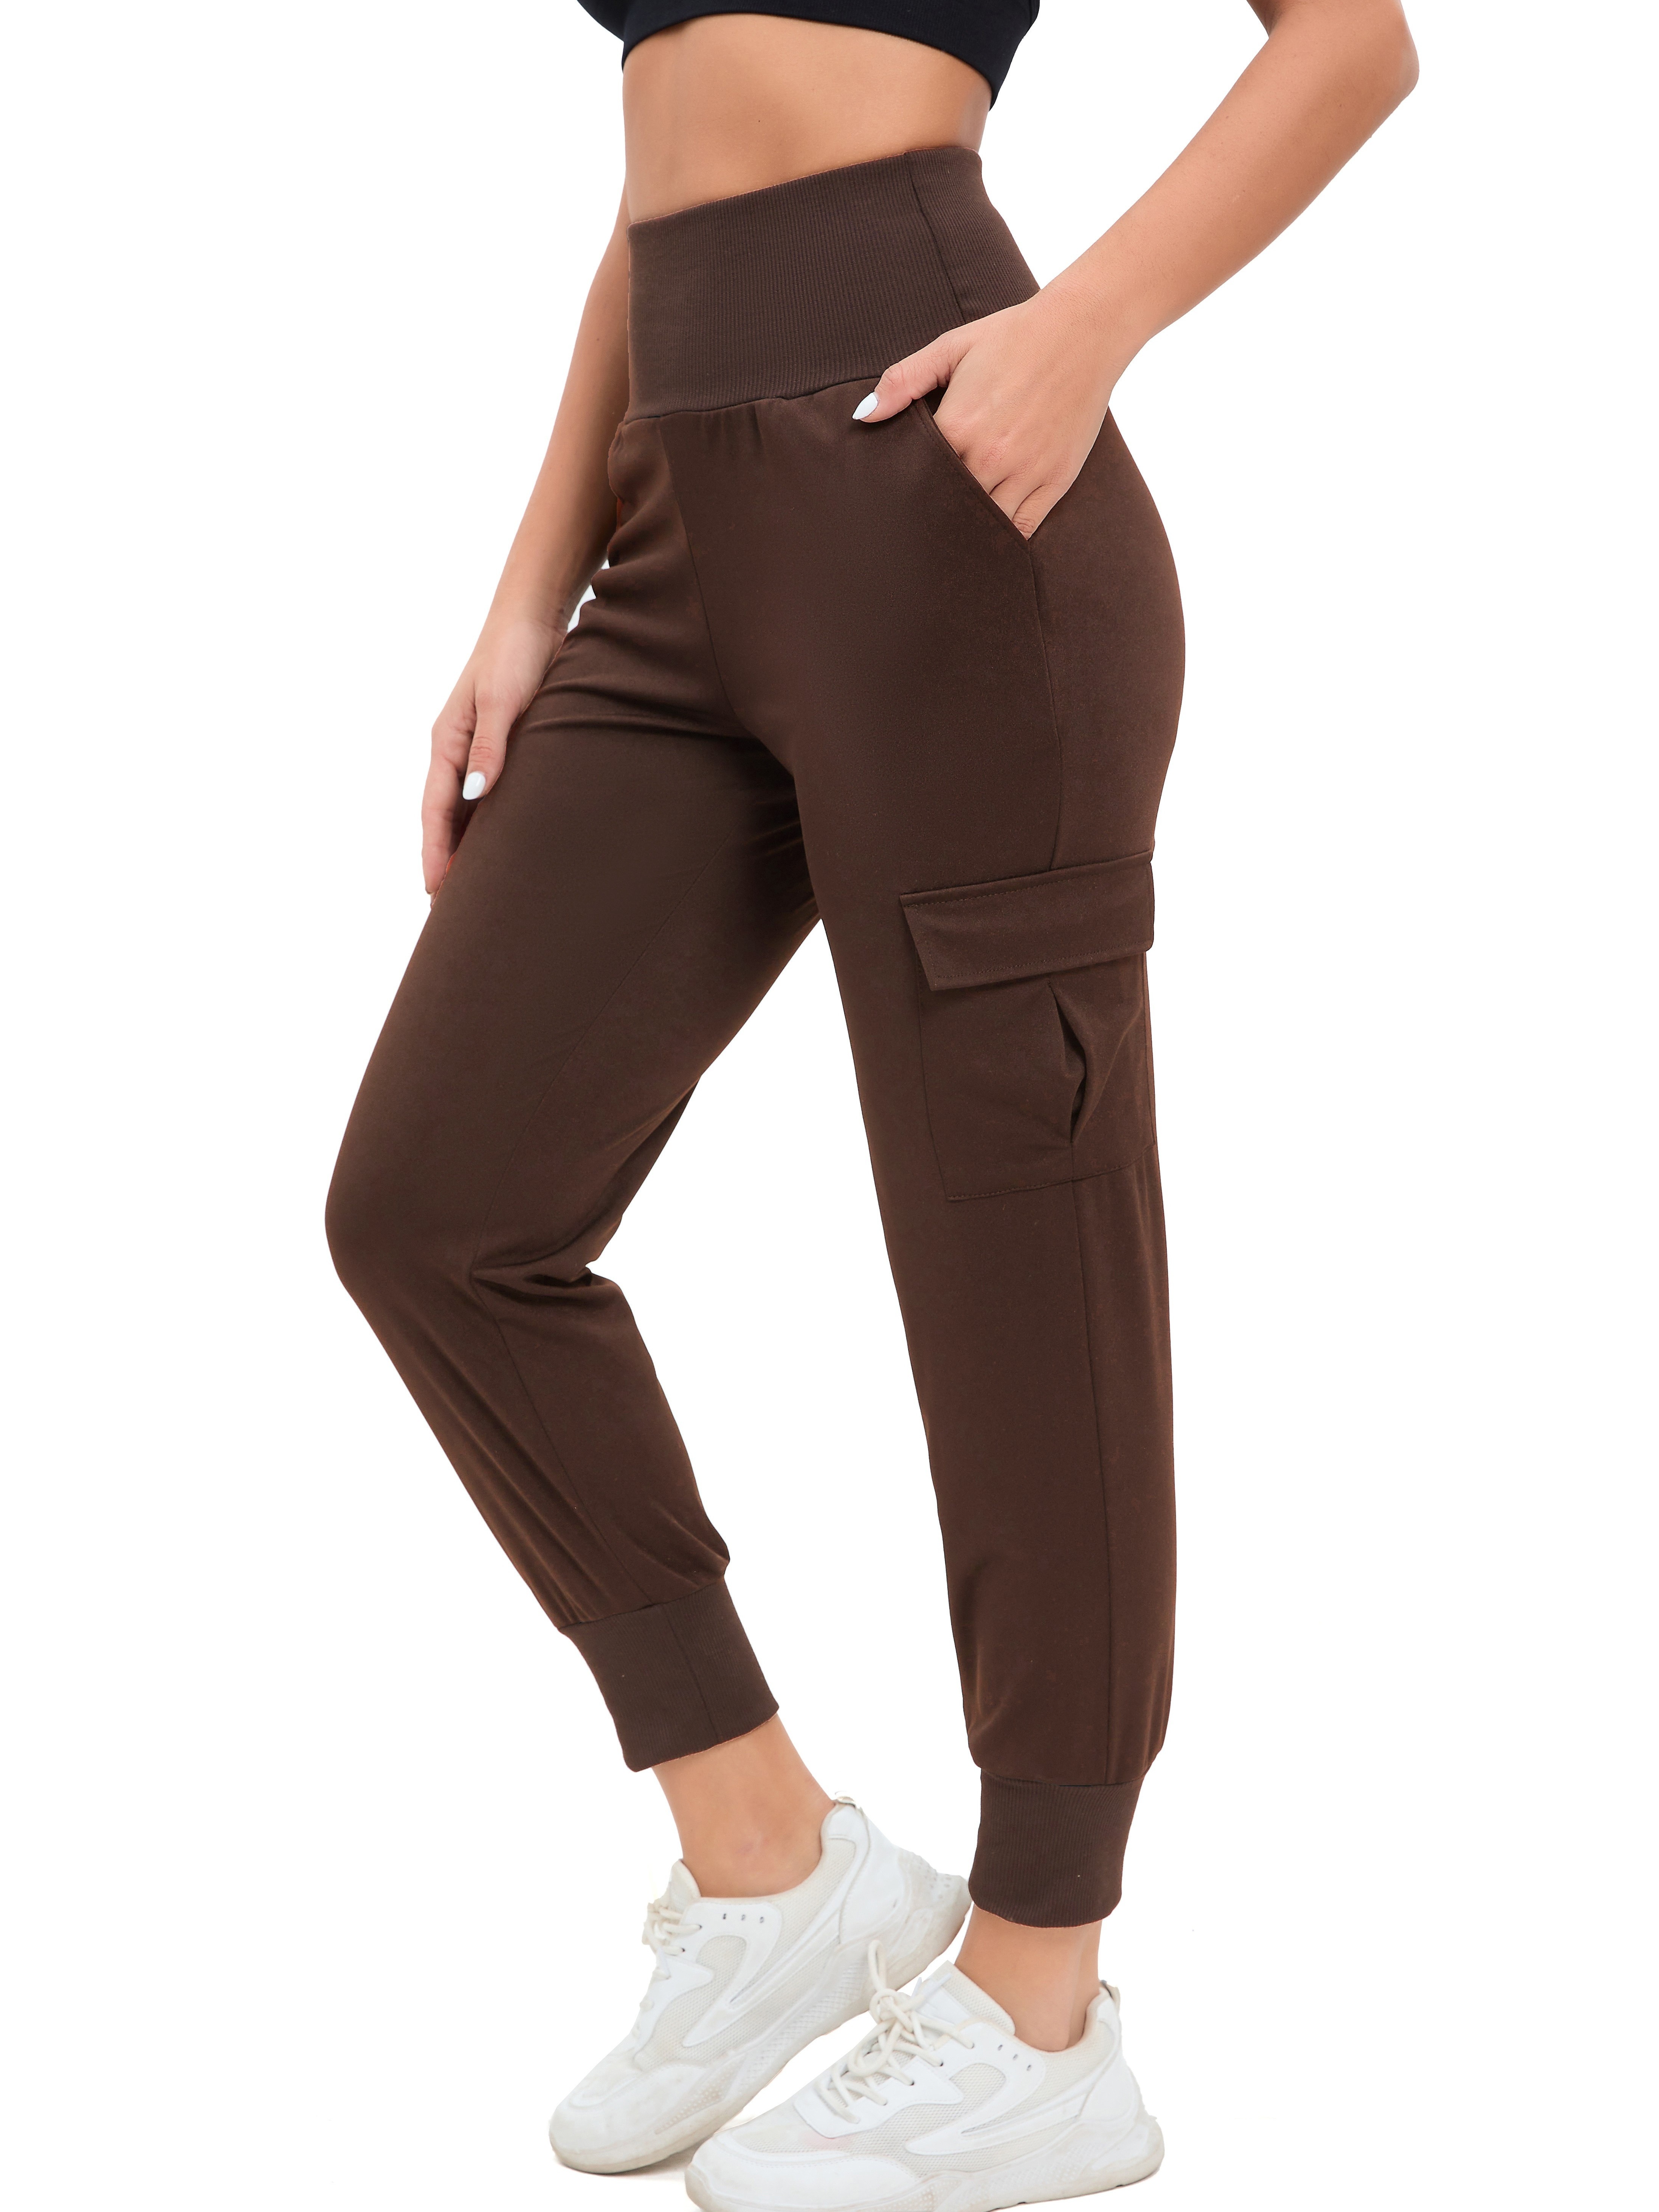 Women Pocket Casual Loose Baggy Sweatpants Sport Harem Trousers Yoga Pants